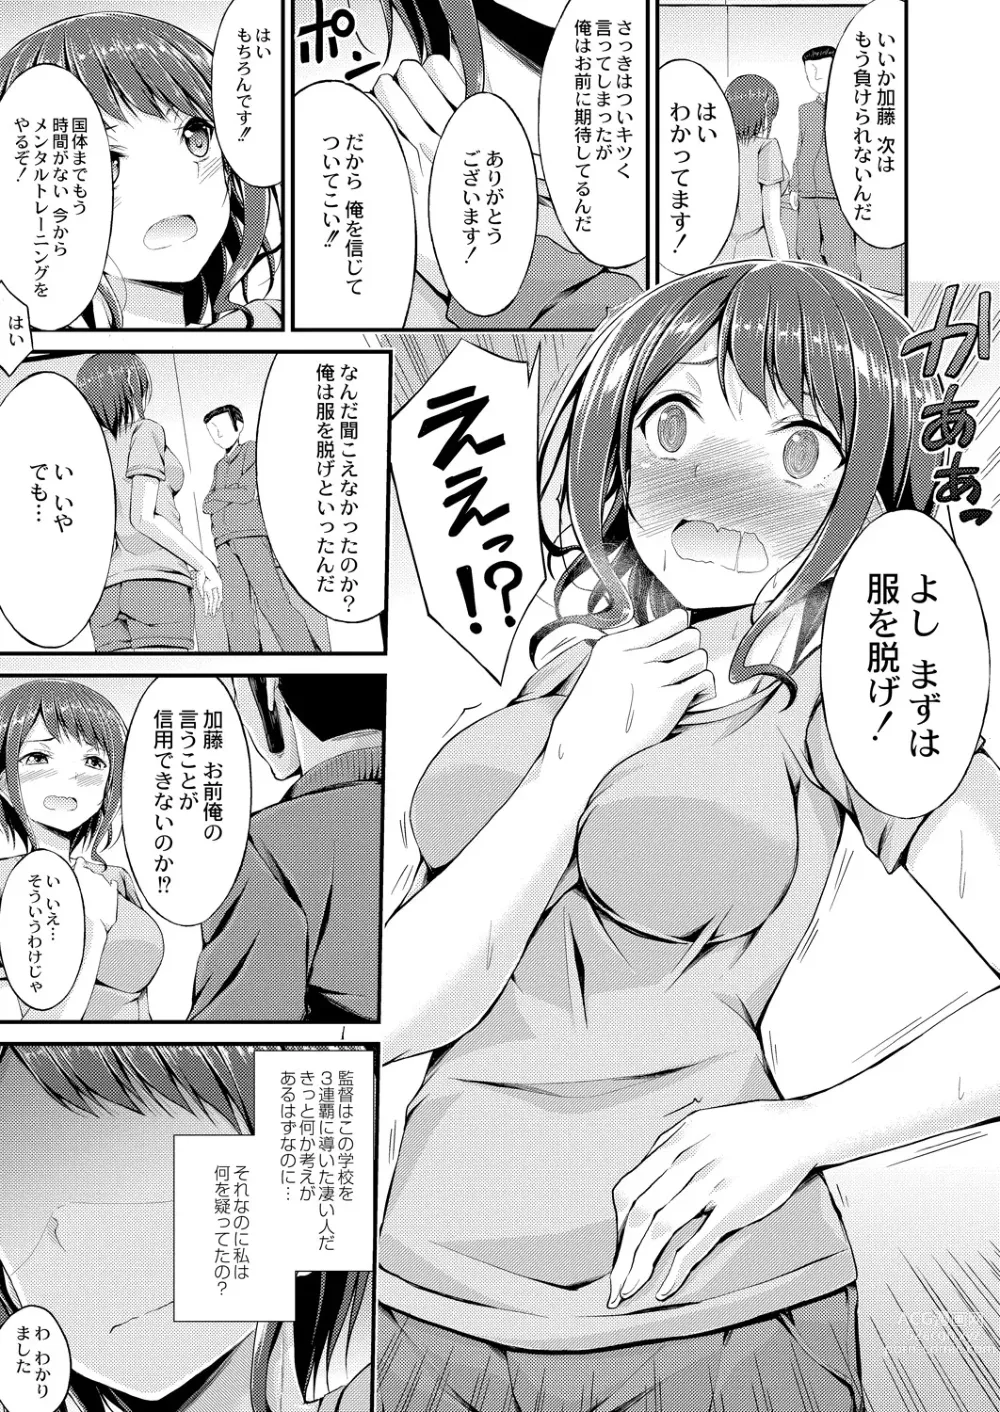 Page 7 of manga Bitch The Fxxk!